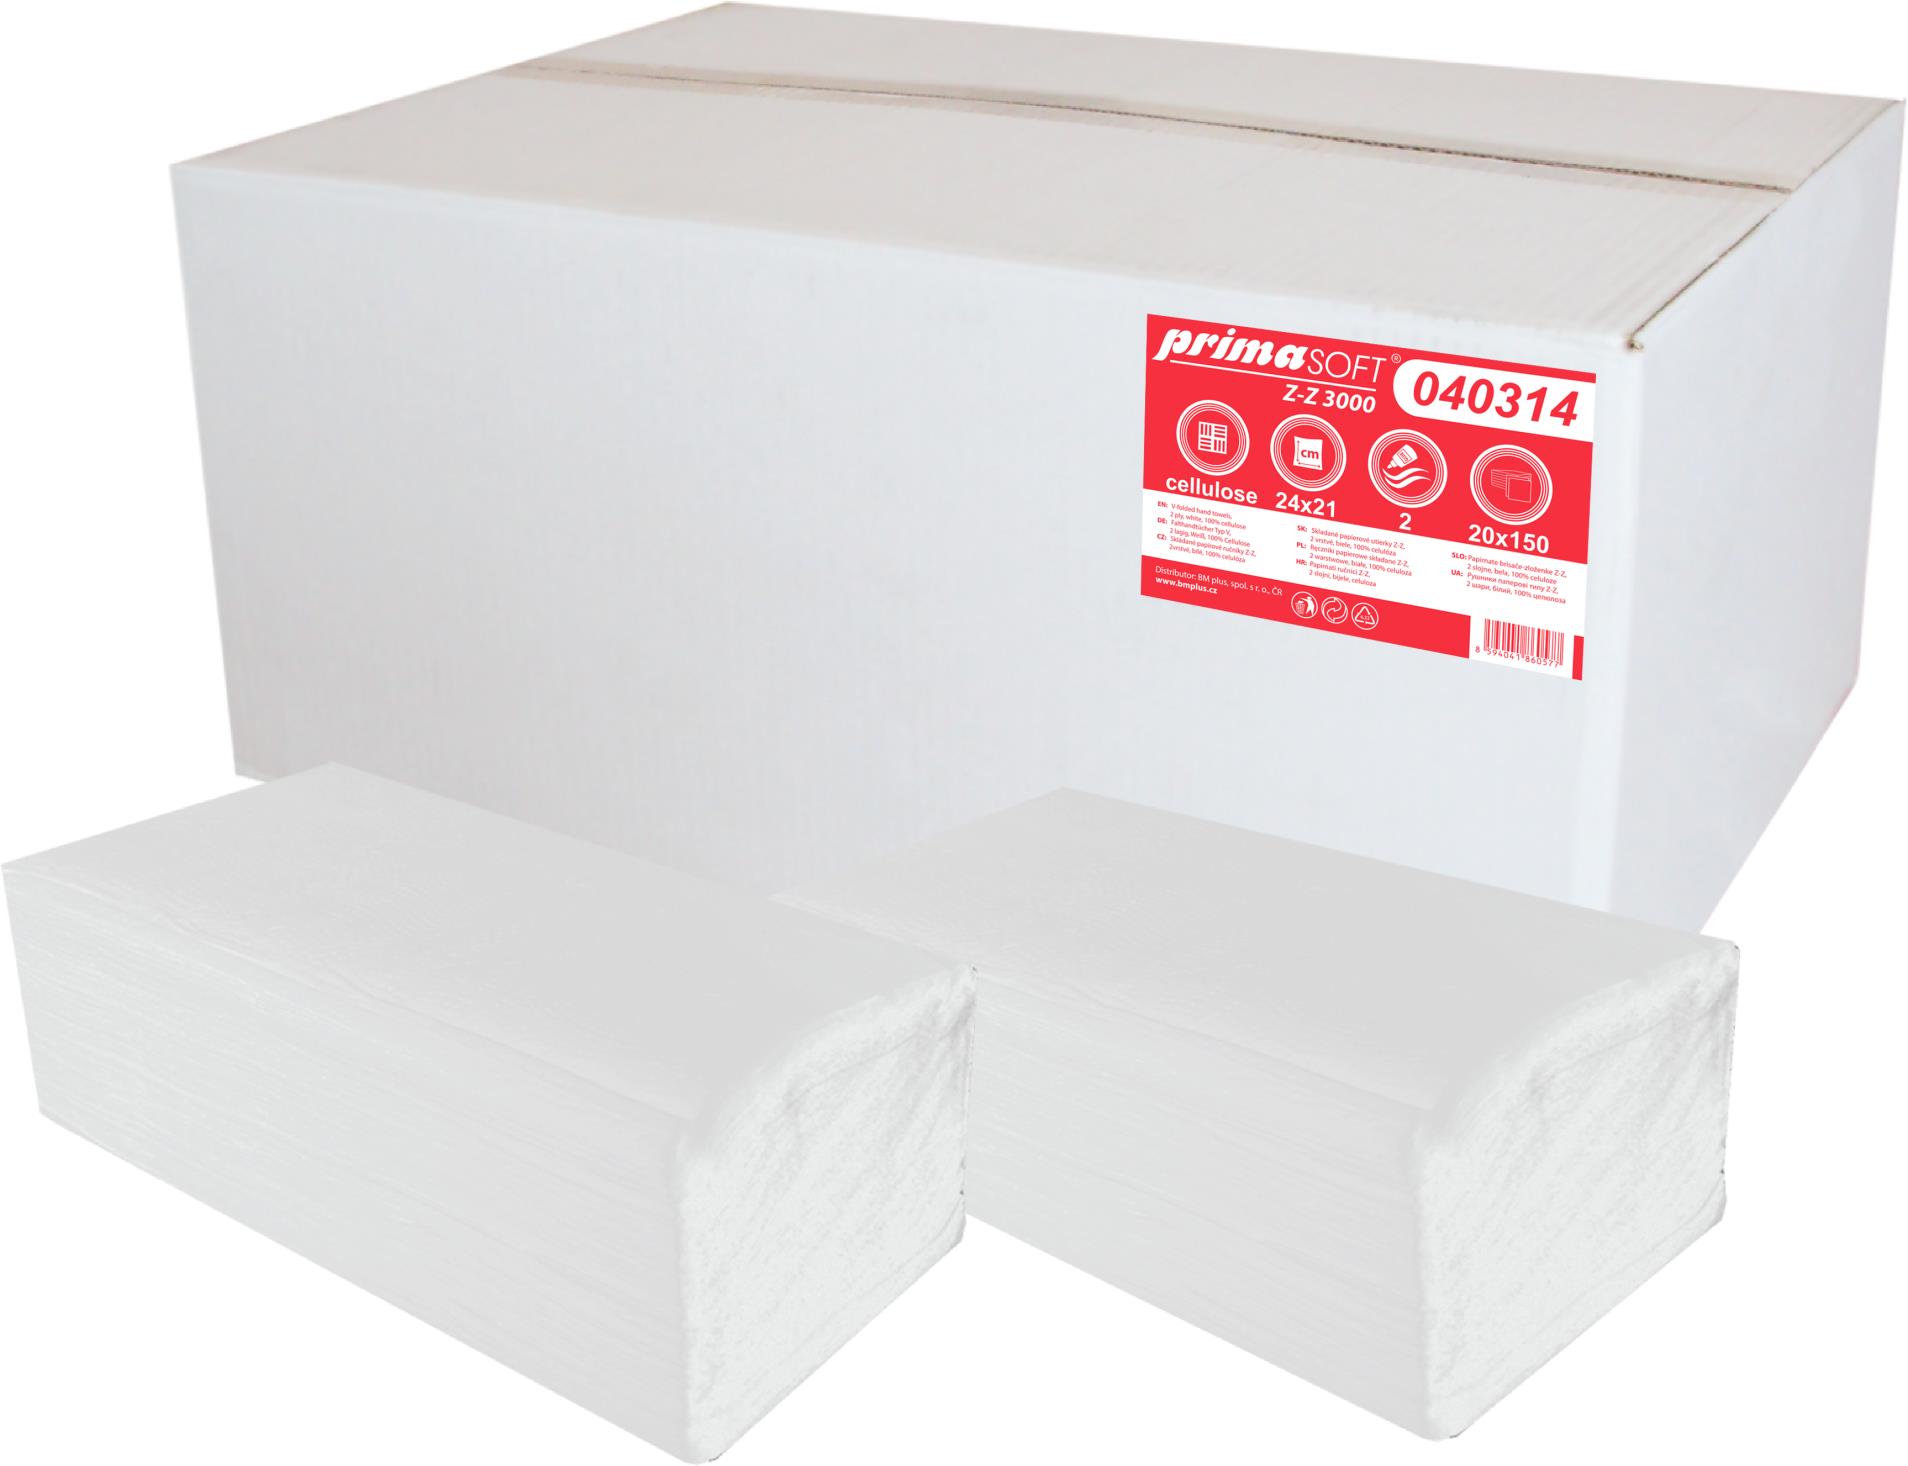 Skládané papírové ručníky Primasoft - 2vrstvé, bílé, 3000 ks